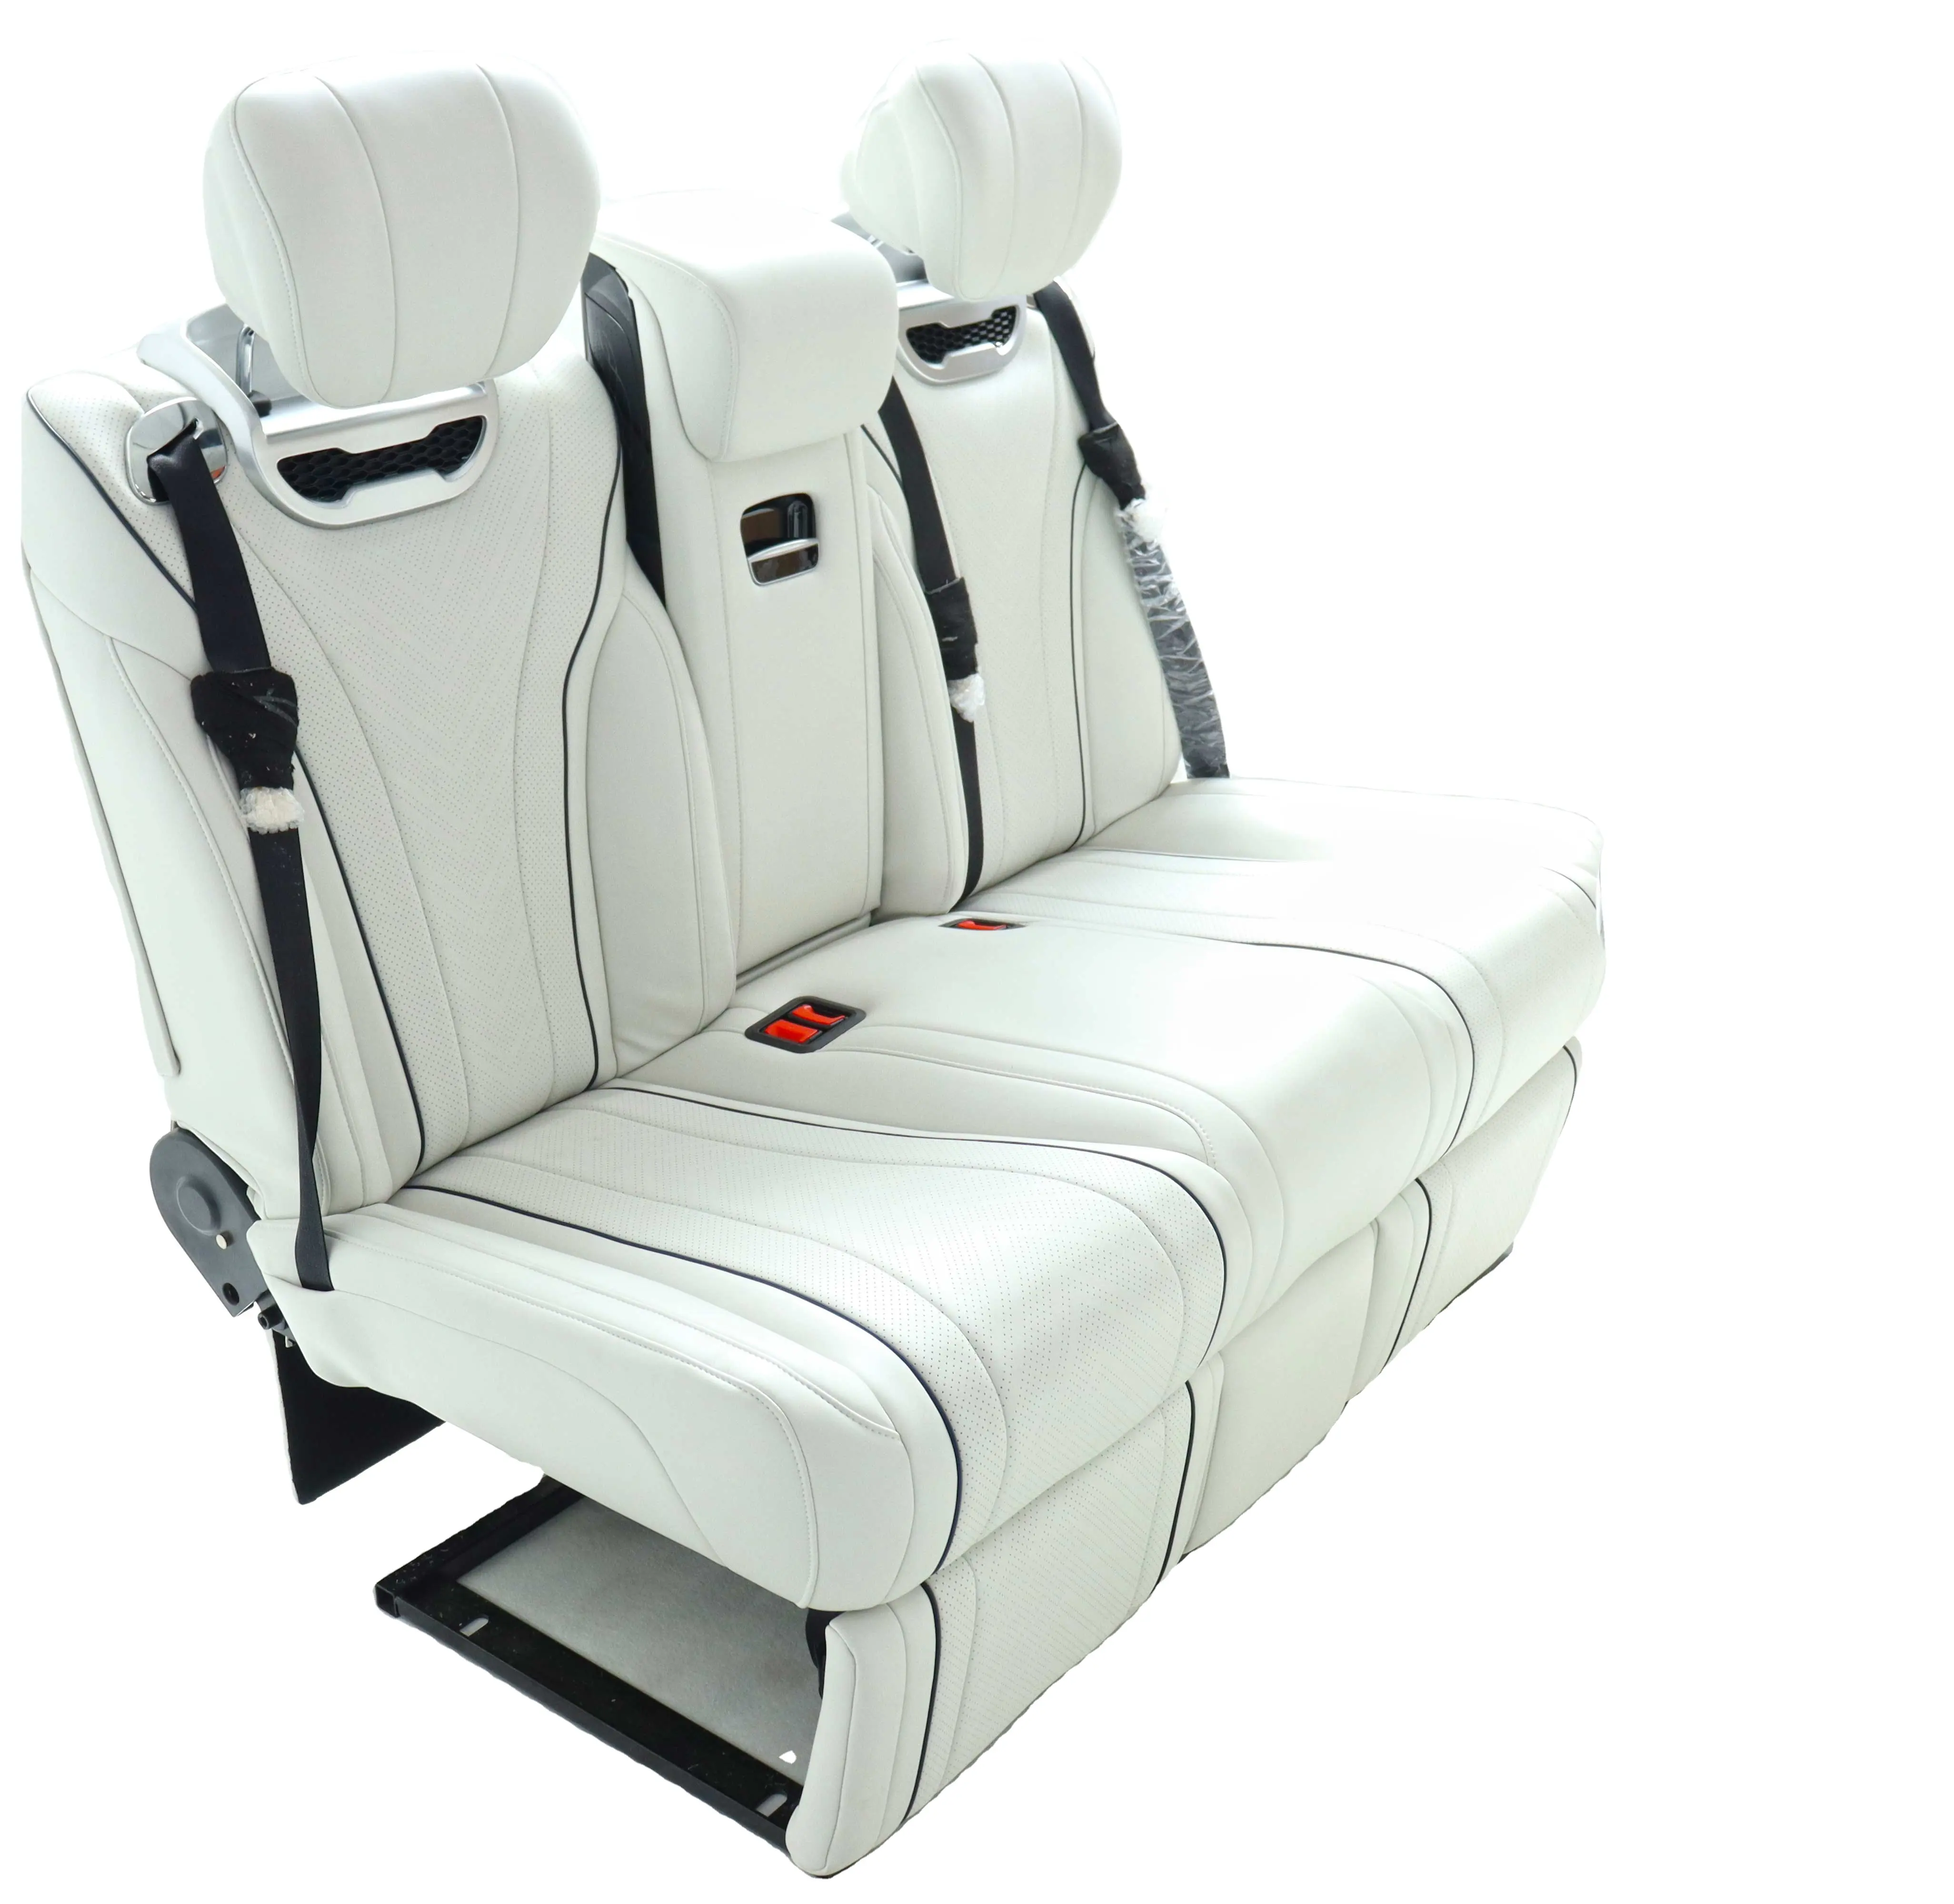 Luxo van Interior conversão assentos de luxo para MPV limusine RV motorhome camper van treinador Sofá Banco Auto Banco Assento